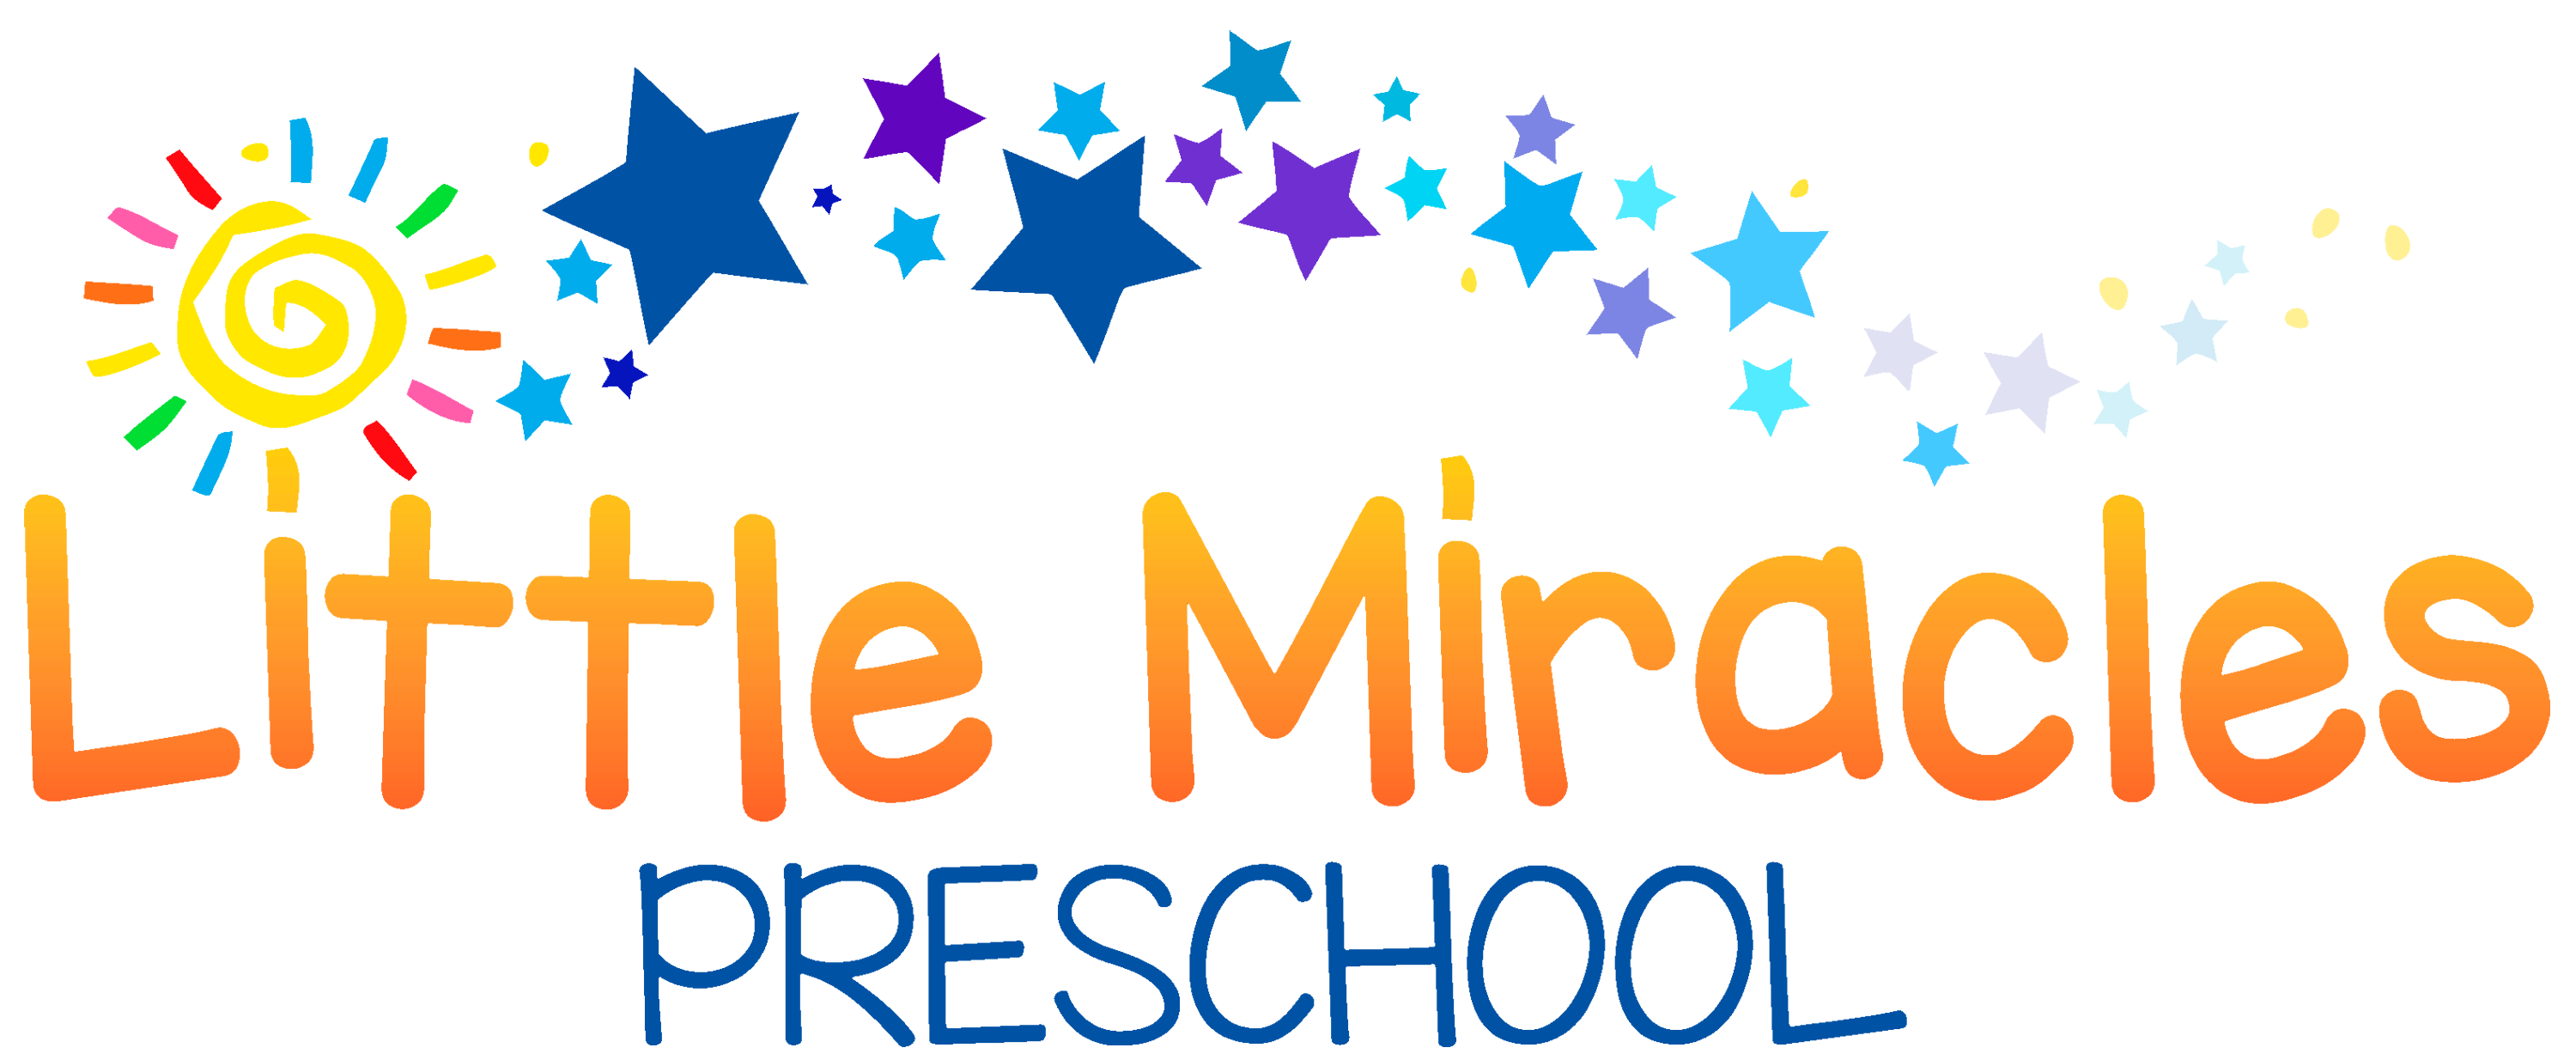 Little Miracles Preschool